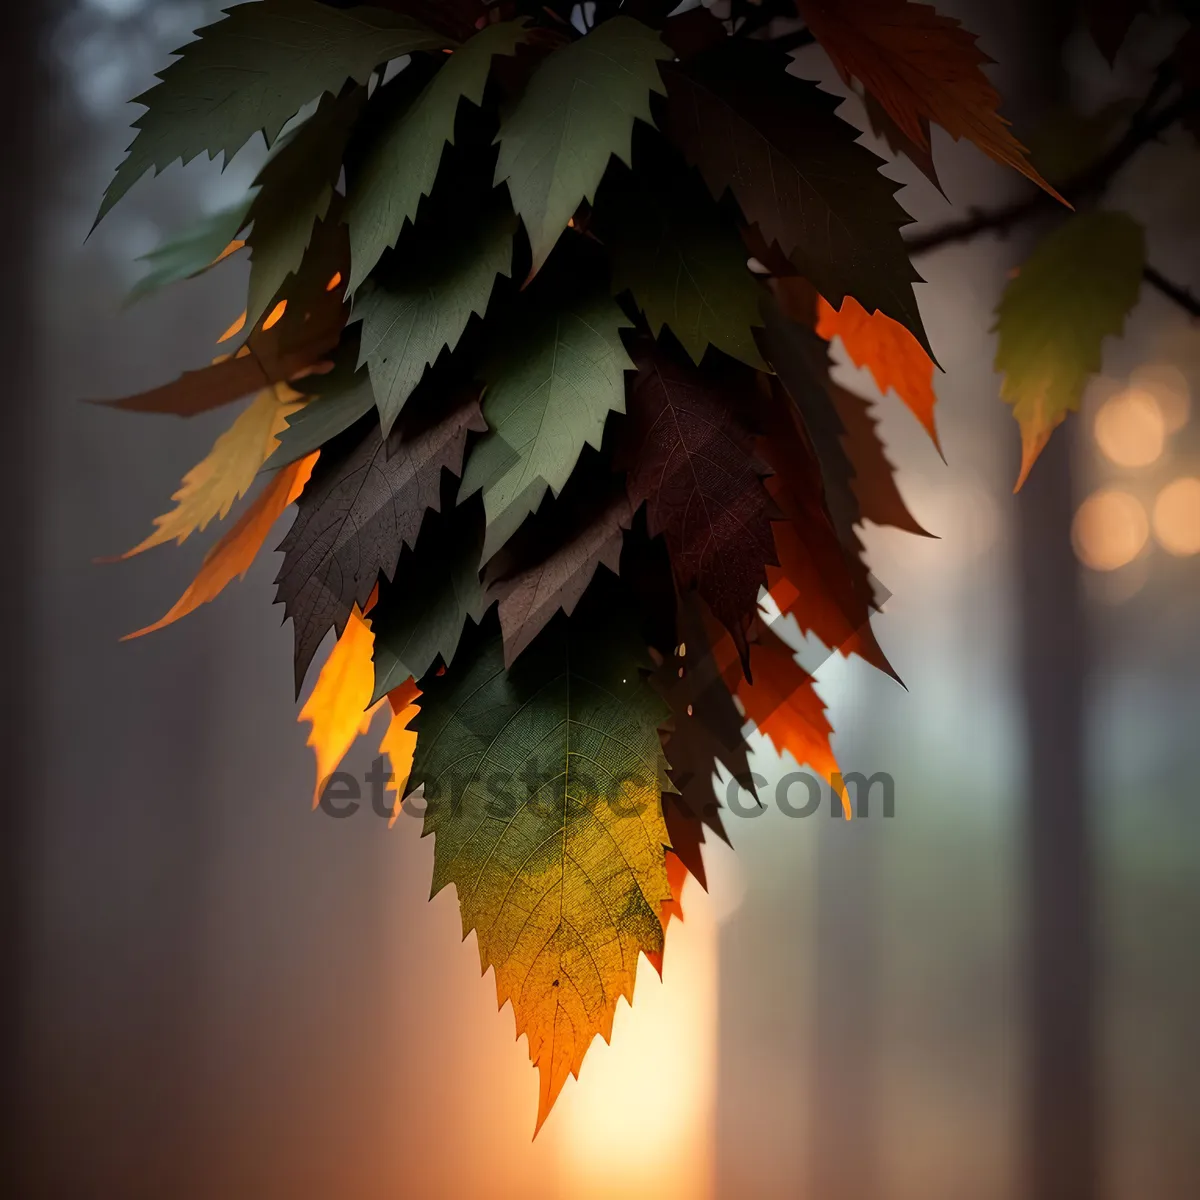 Picture of Vibrant Fall Foliage Under Golden Autumn Sun